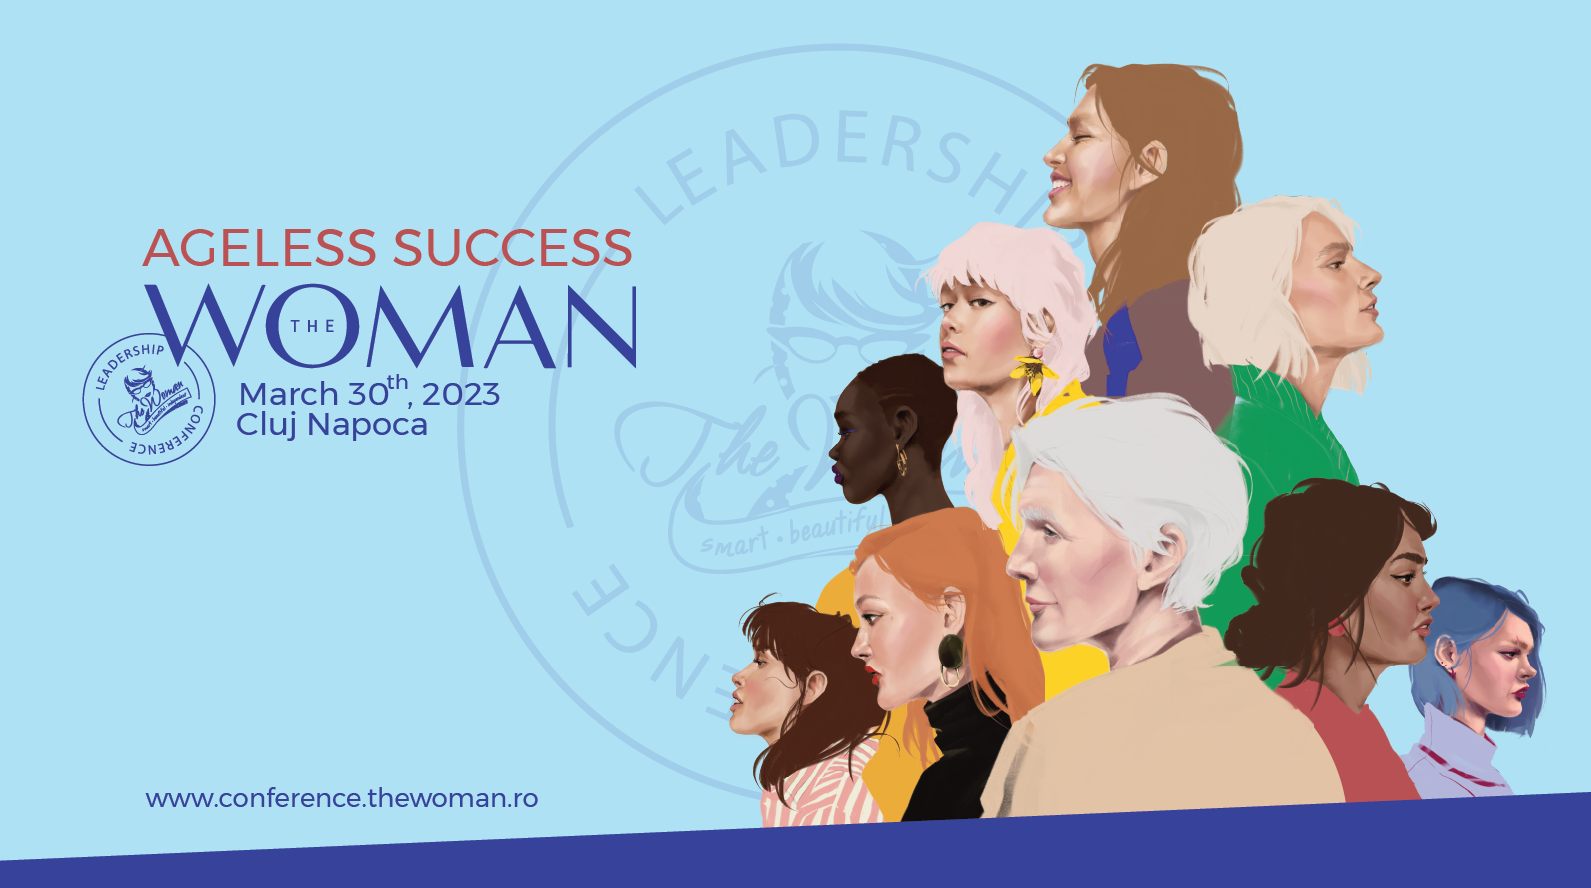 Conferința de leadership feminin The Woman 2023